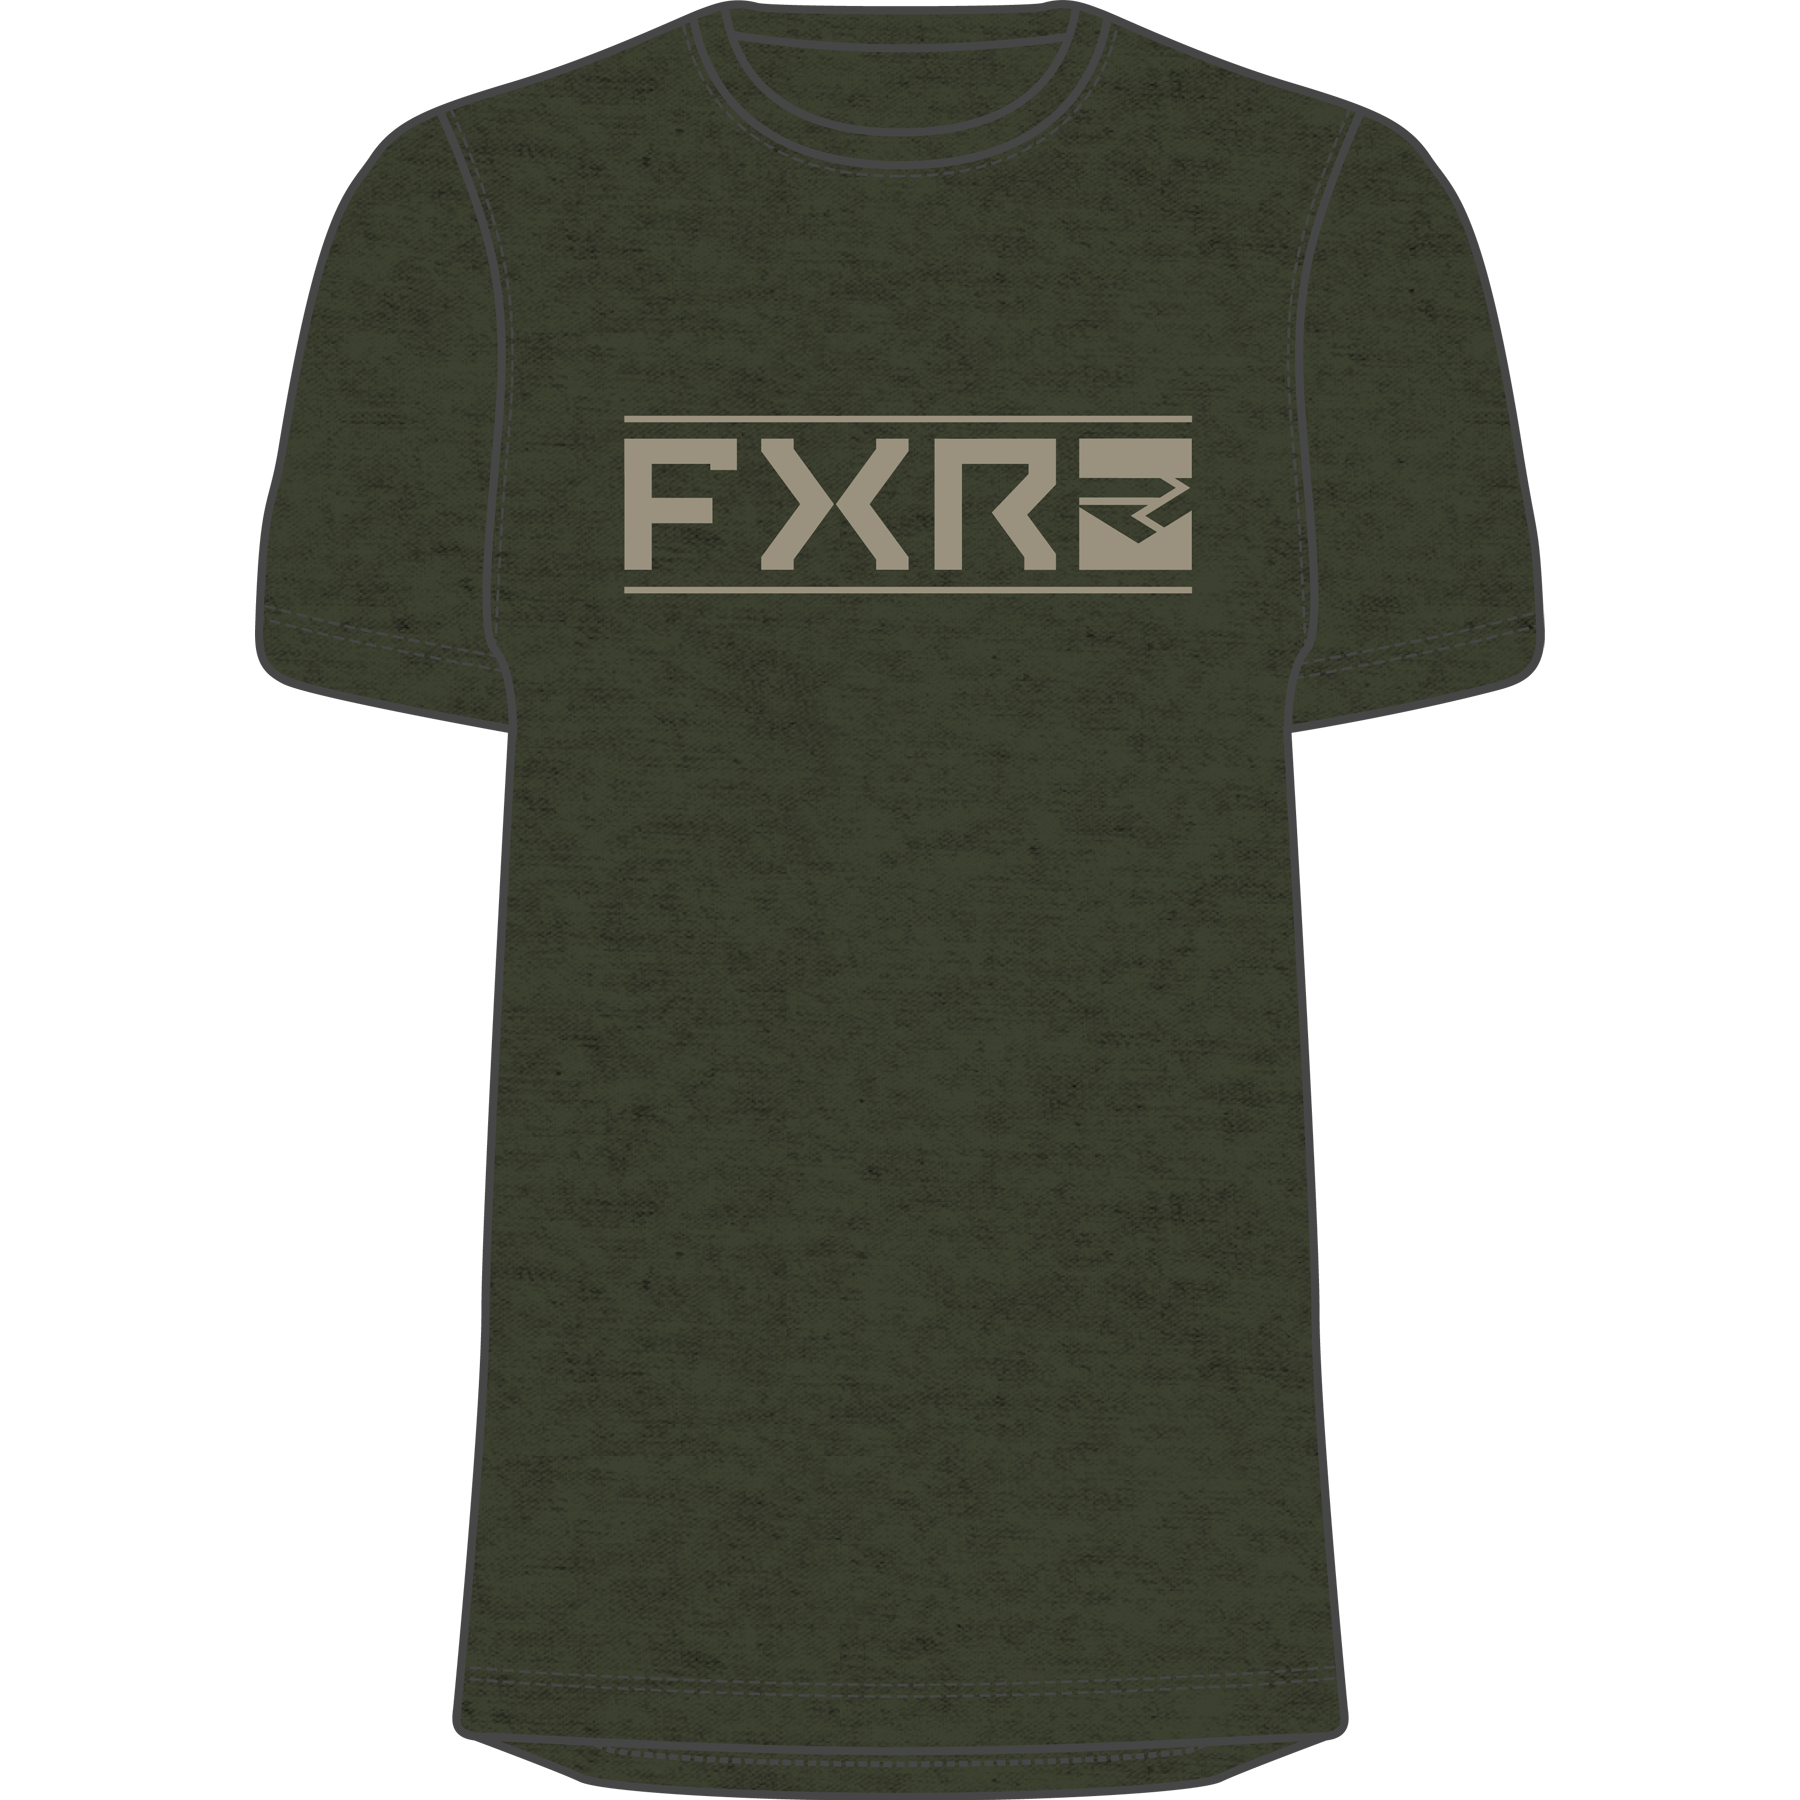 fxr racing t-shirt shirts for men victory premium